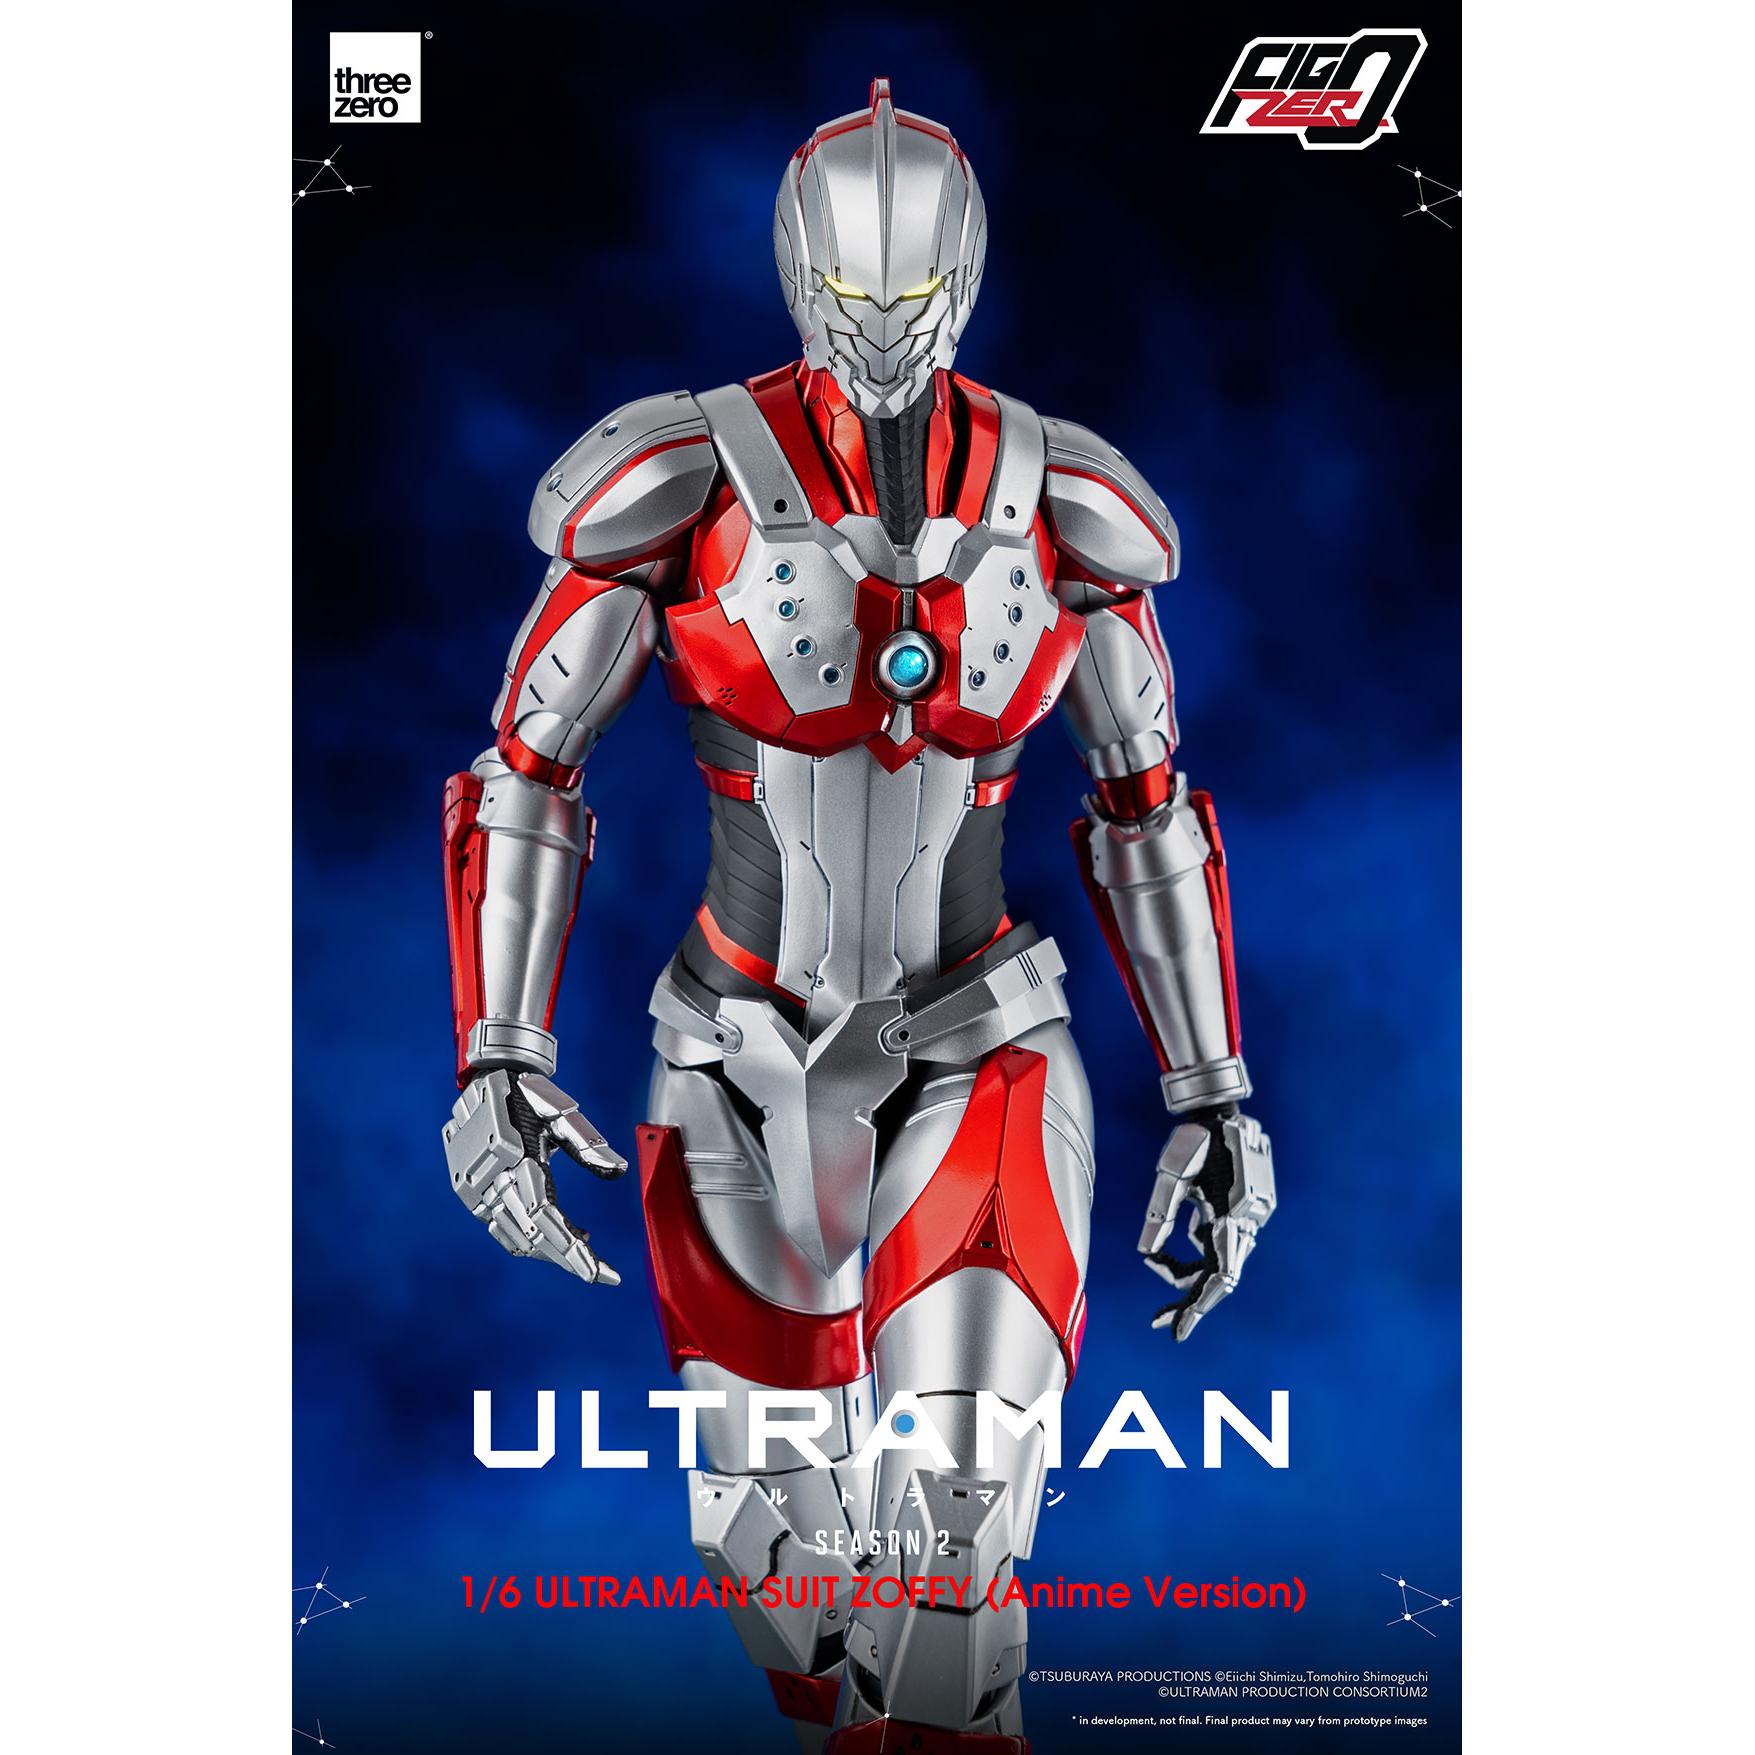 Anime 'ULTRAMAN' Season 2 FigZero 1/6 ULTRAMAN SUIT ZOFFY (Anime Version) |  Bandai gundam models kits premium shop online at Ampang, Selangor | Bandai  Toy Shop @ . Our online shop offers